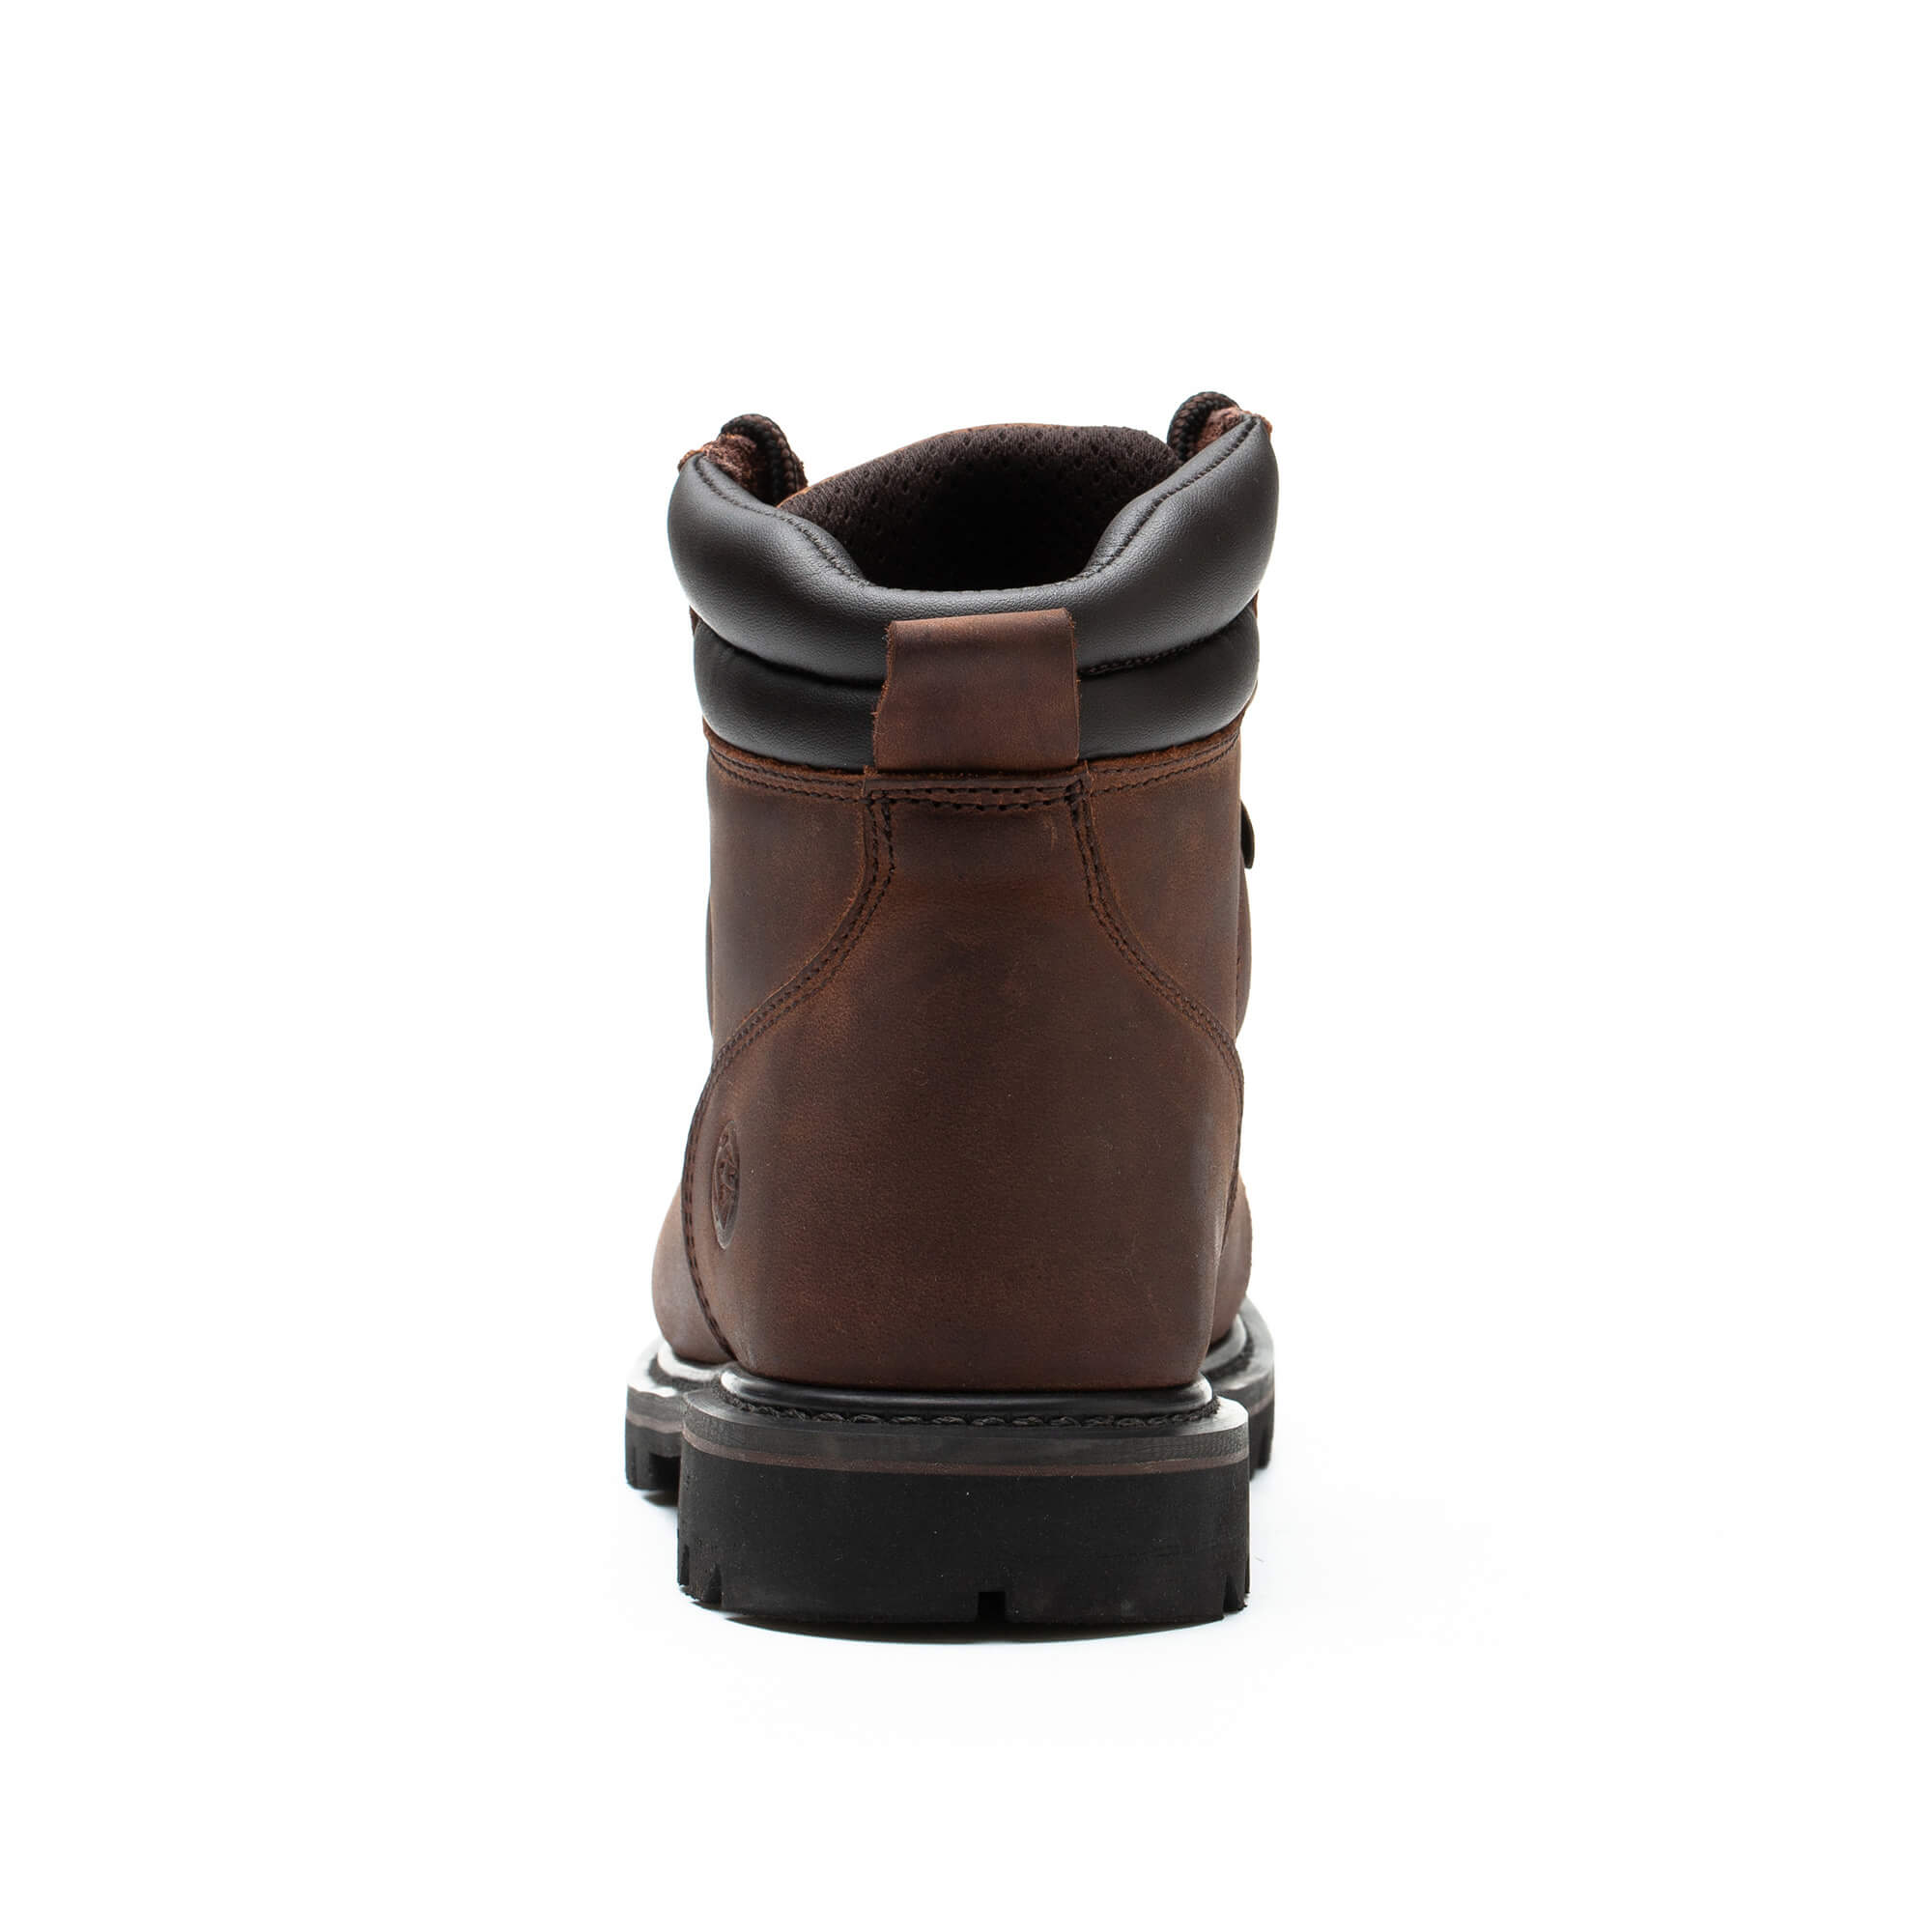 RAYDLINX Men's Nubuck leather upper 6'' Work Boots - Steel Toe